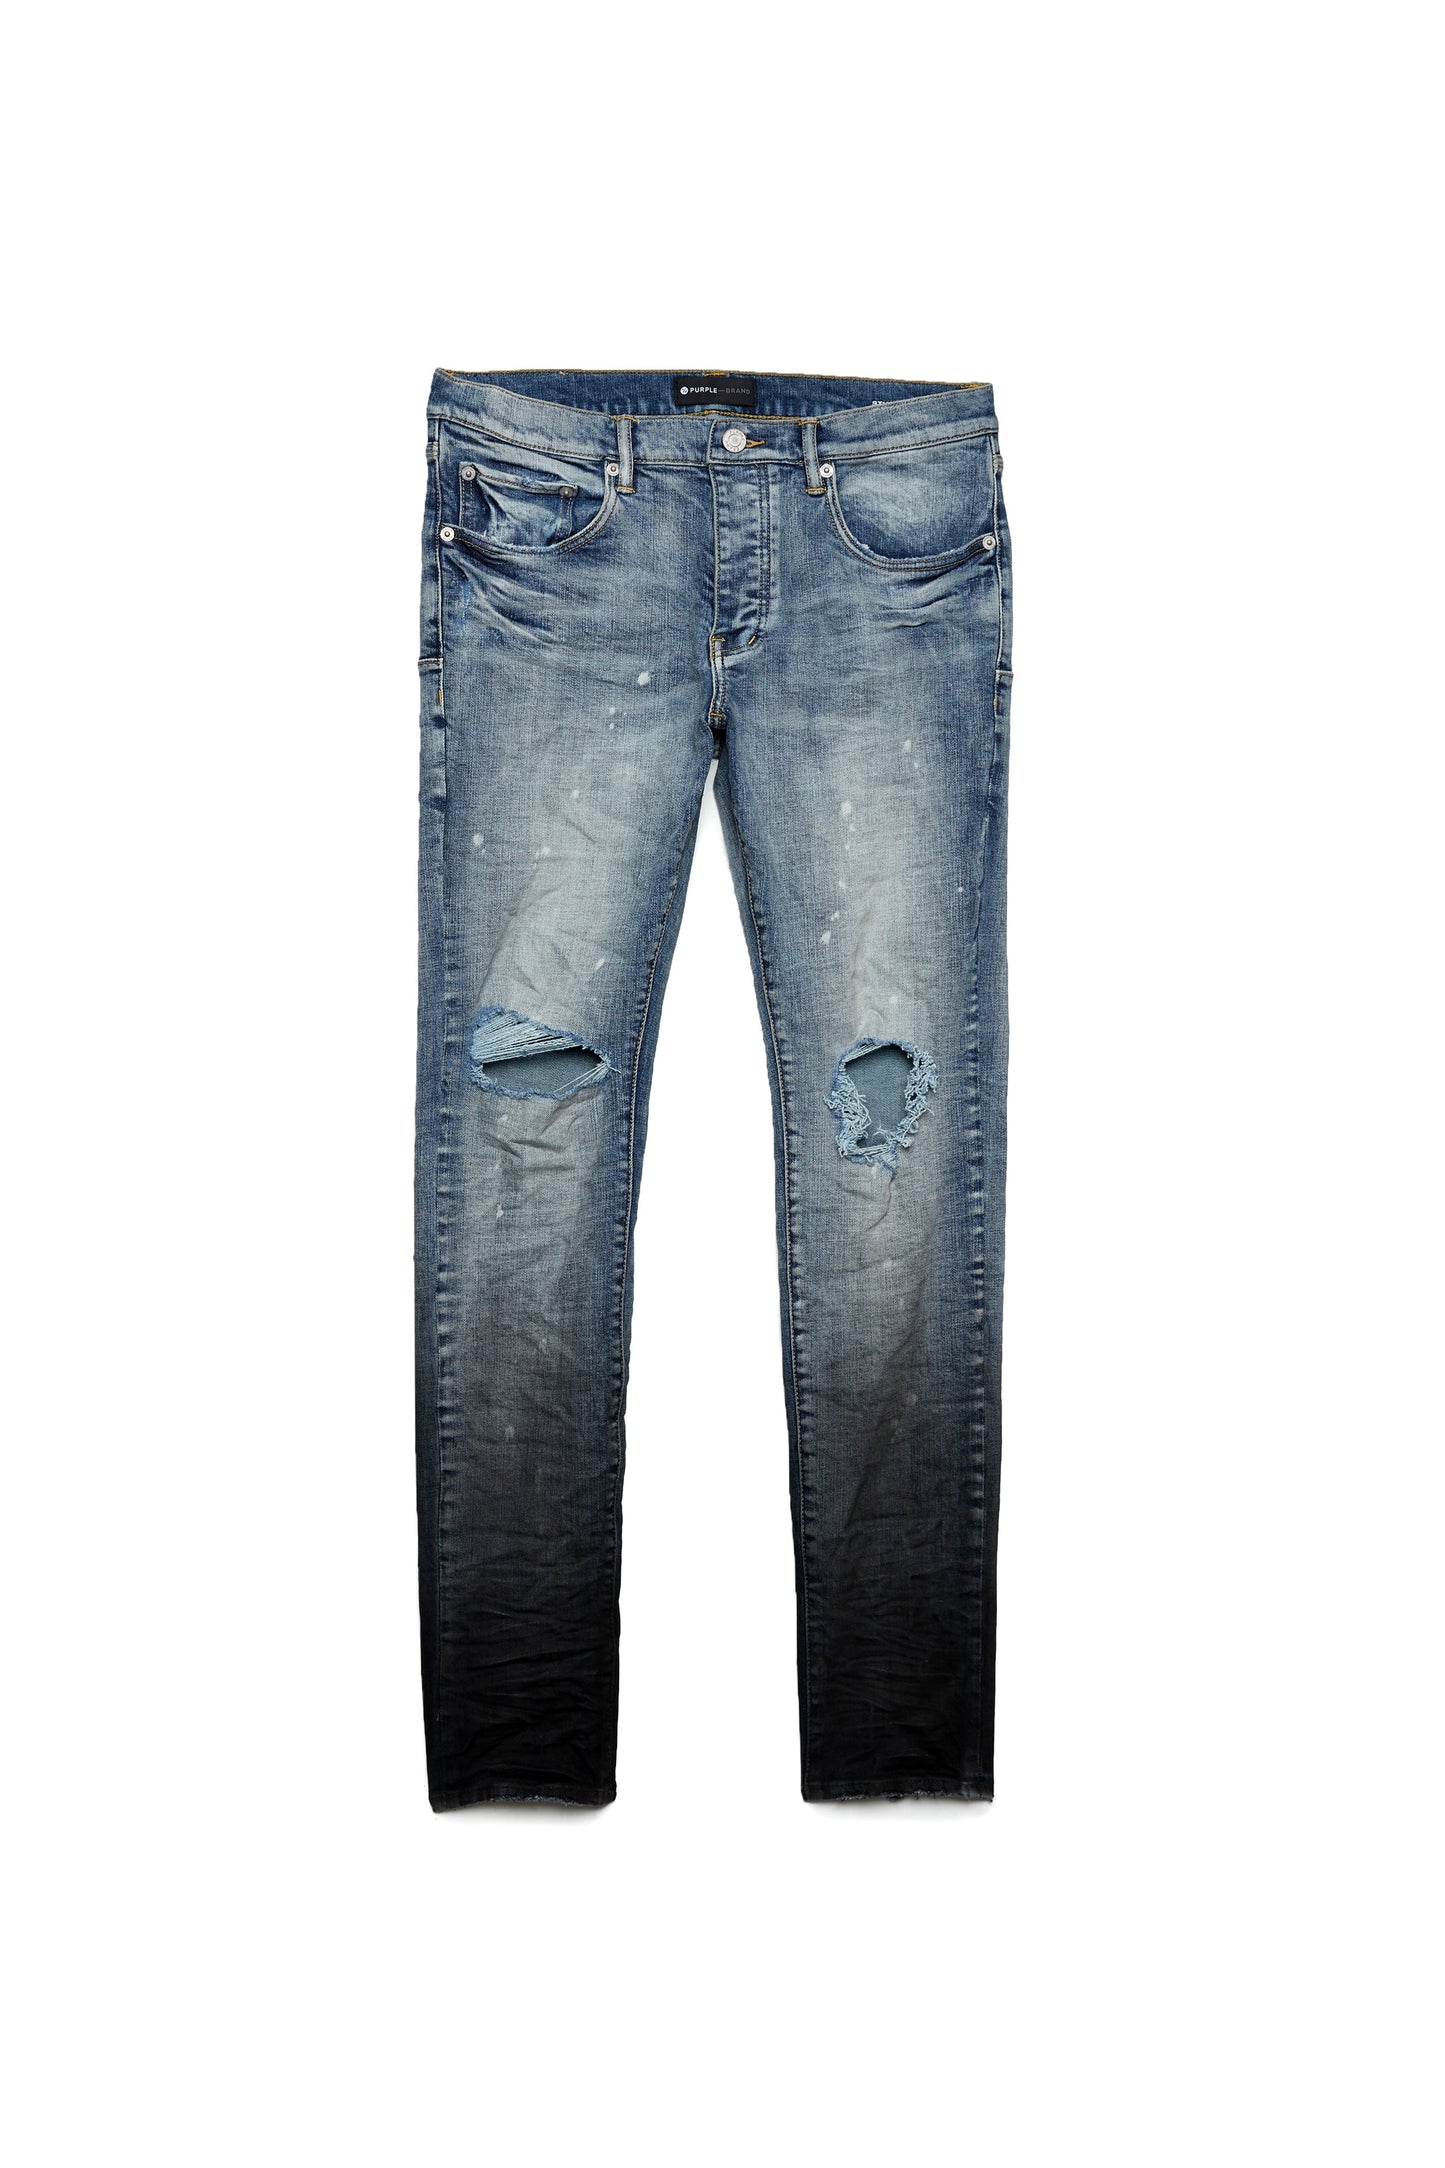 PURPLE BRAND - Men's Denim Jean - Low Rise Skinny - Style No. P001 - Indigo Black Gradient - Front